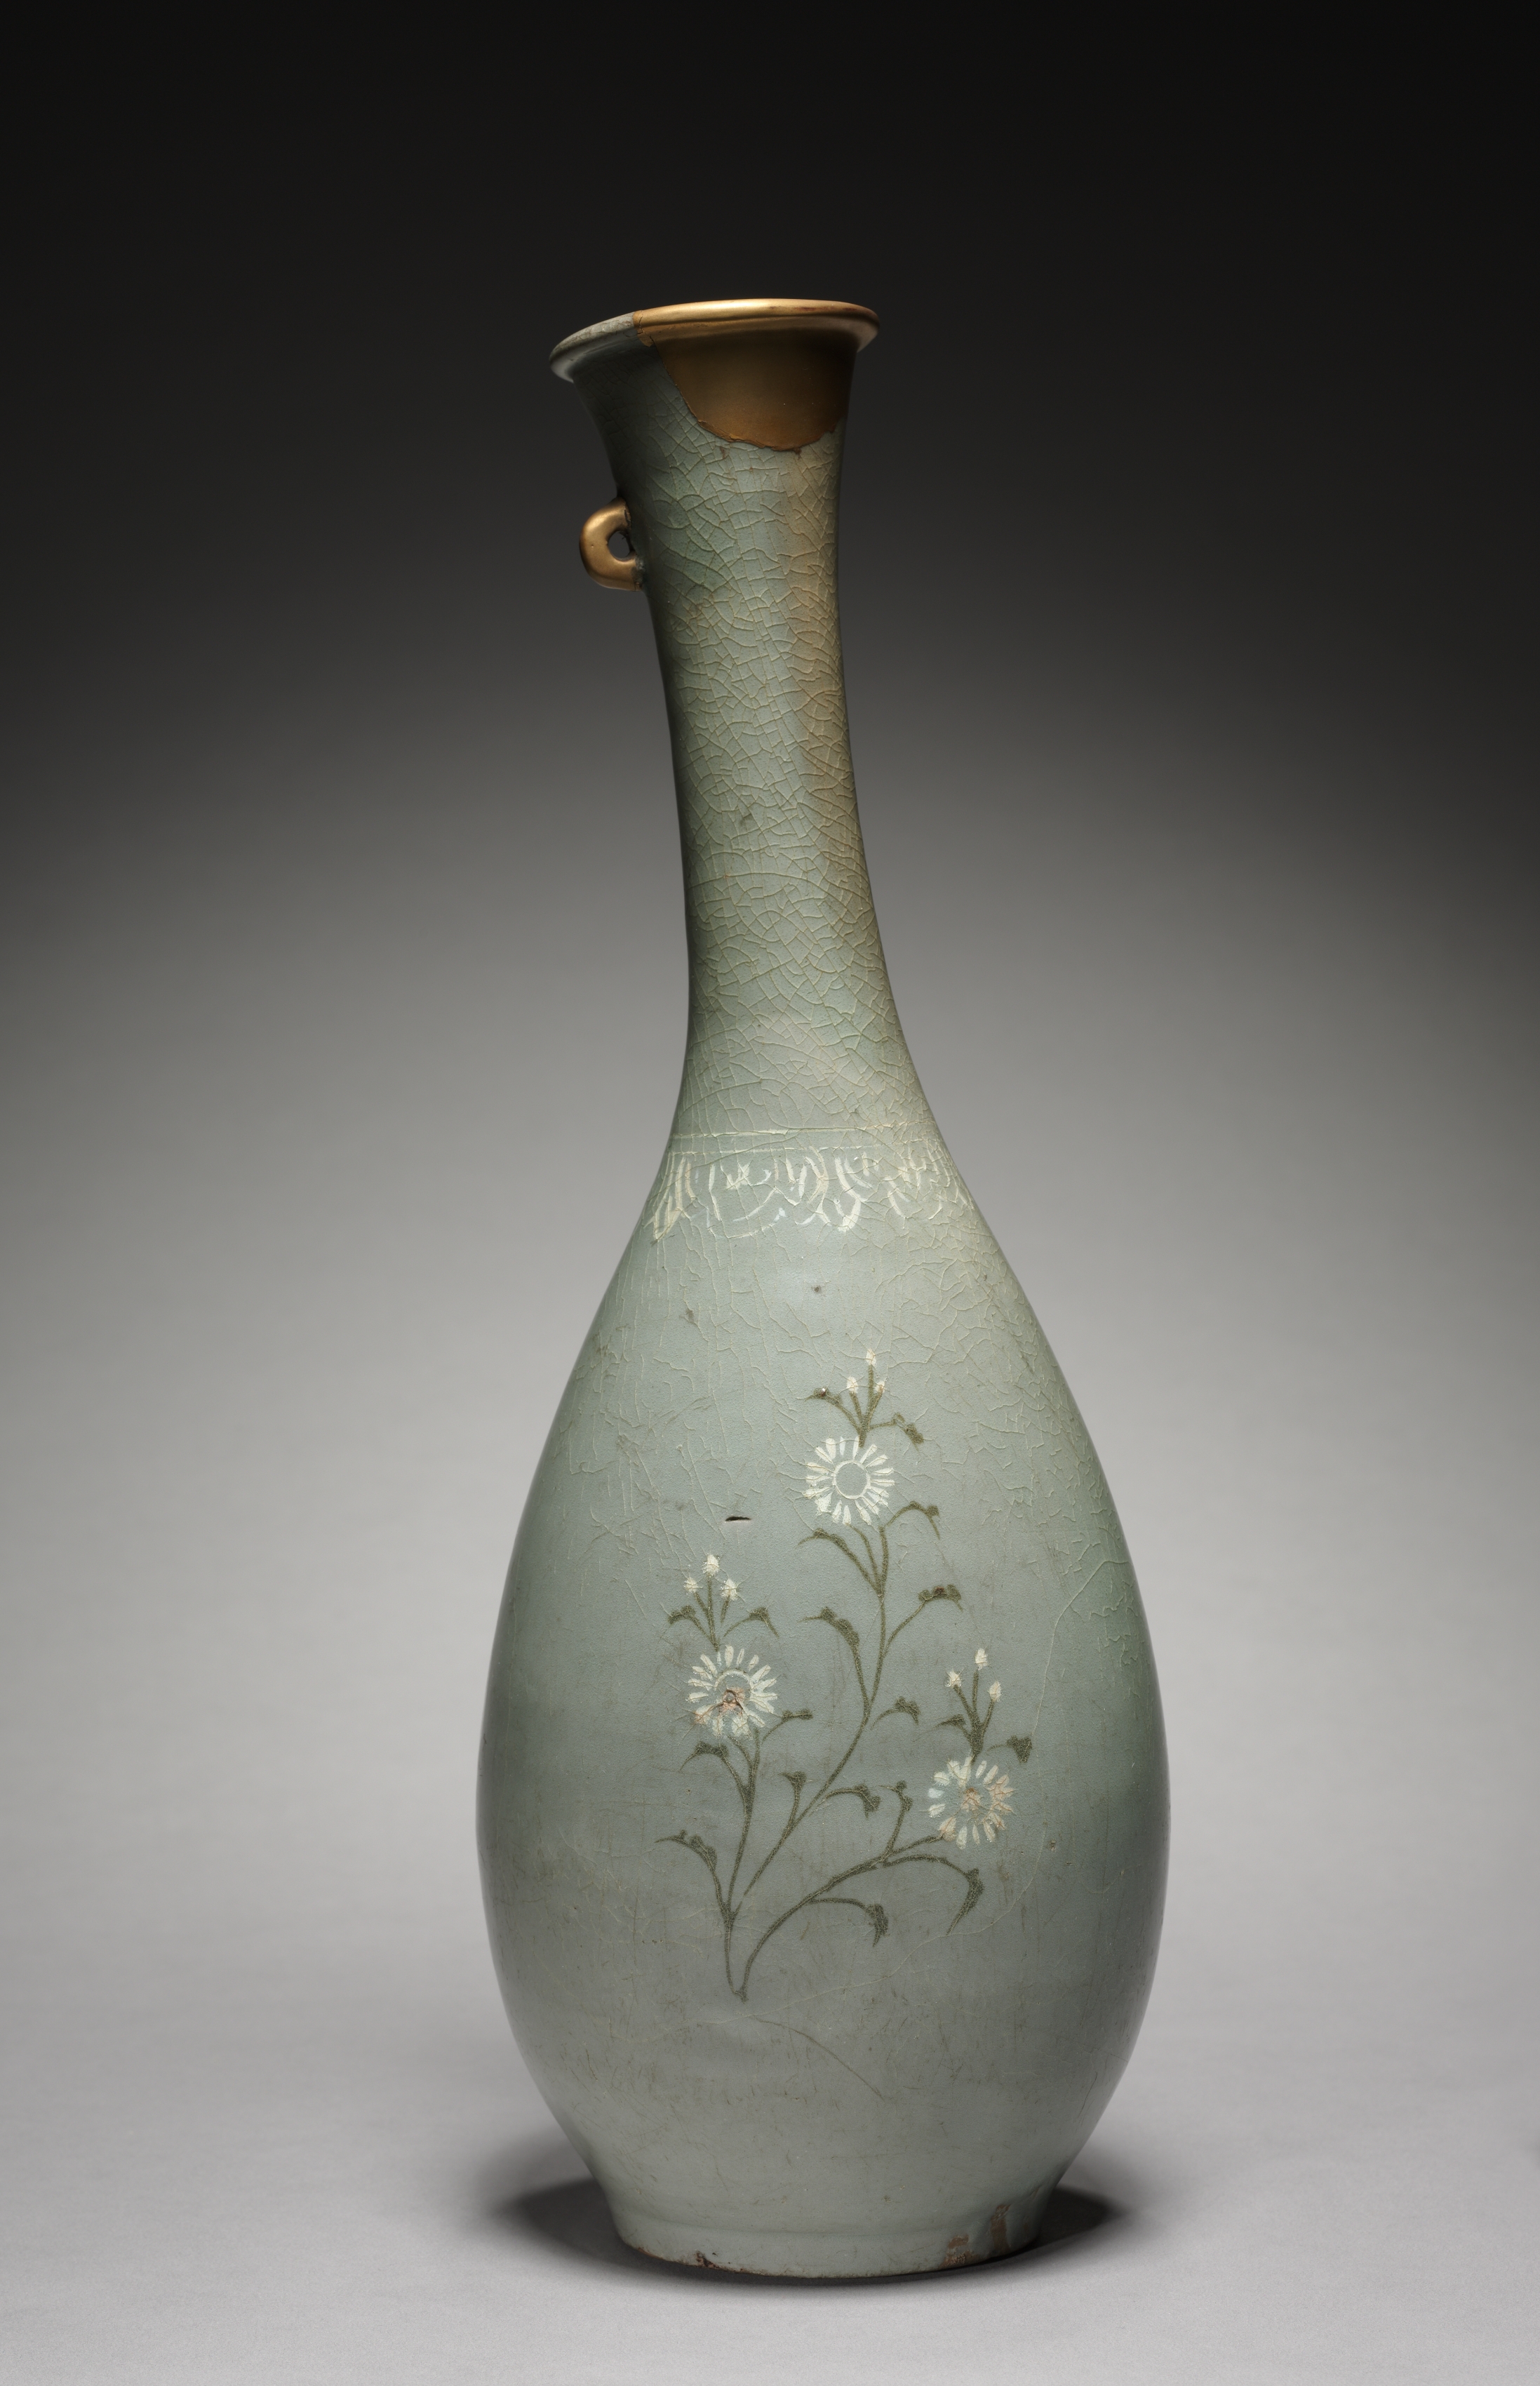 Bottle with Chrysanthemum Design